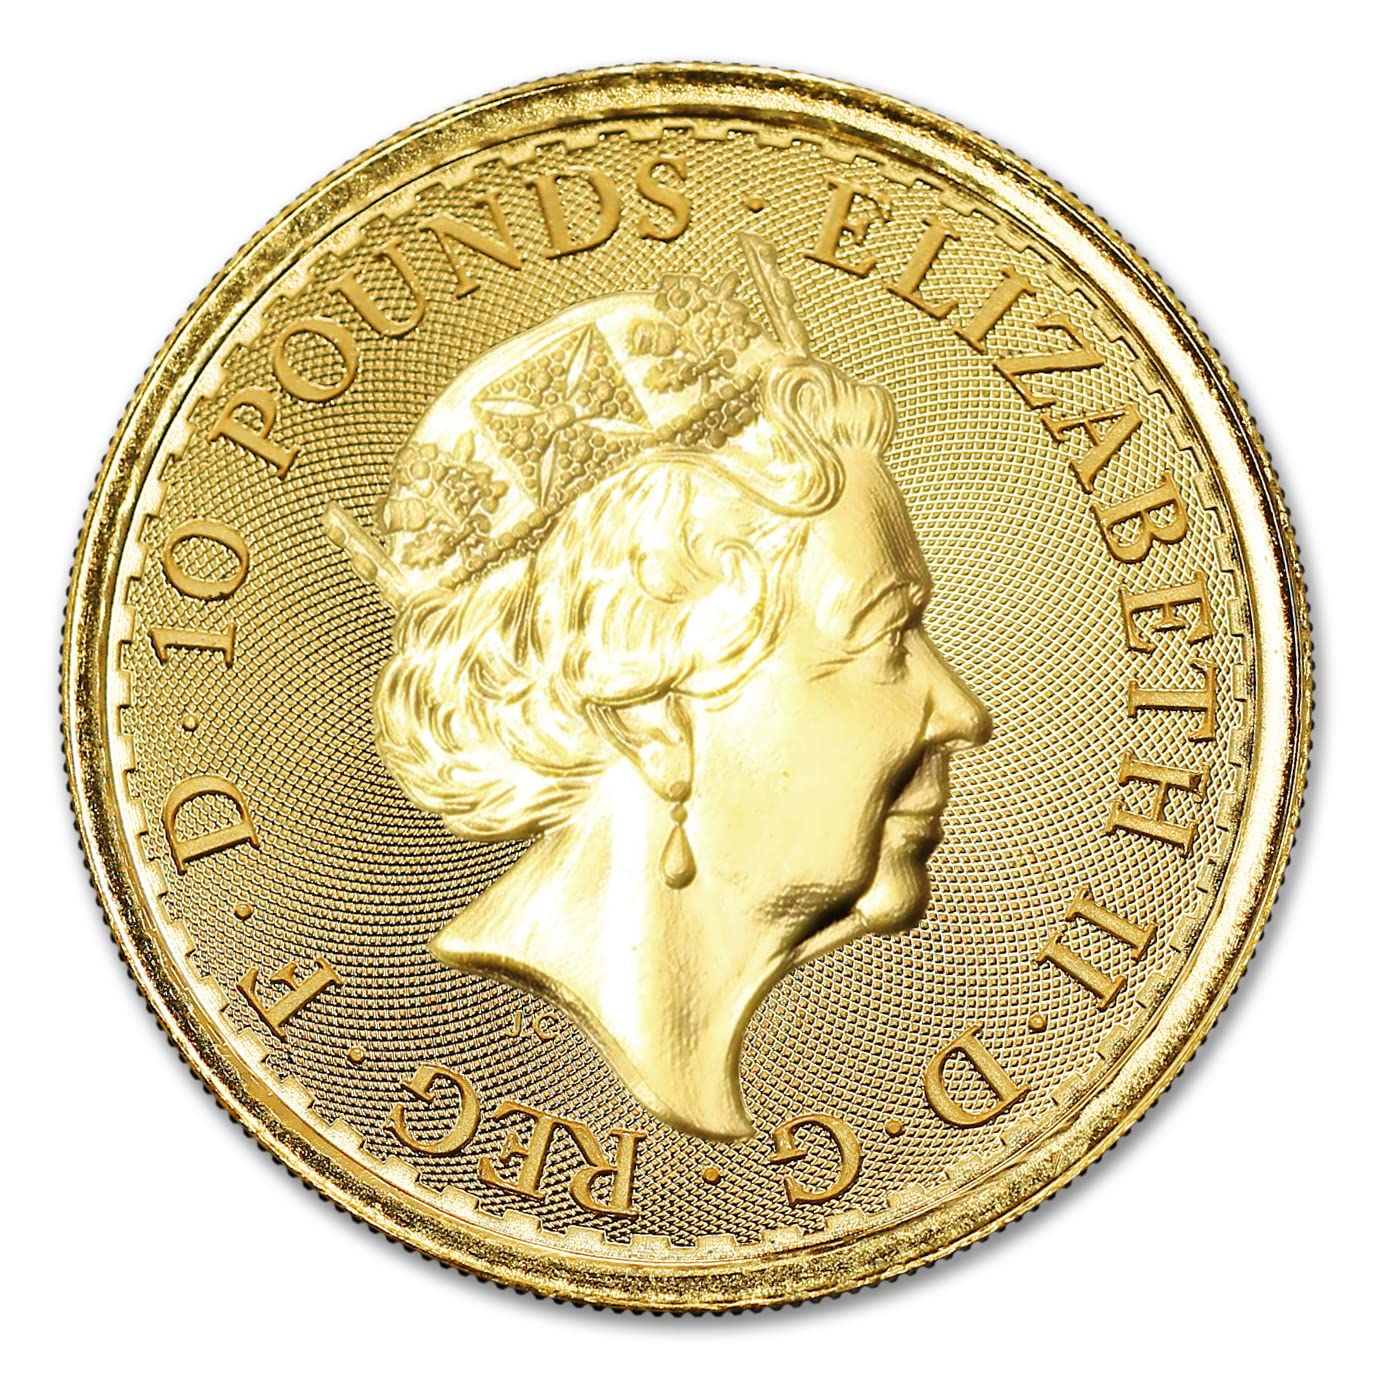 2023 1/10 oz British Gold Britannia Coin BU - With Certificate of Authenticity